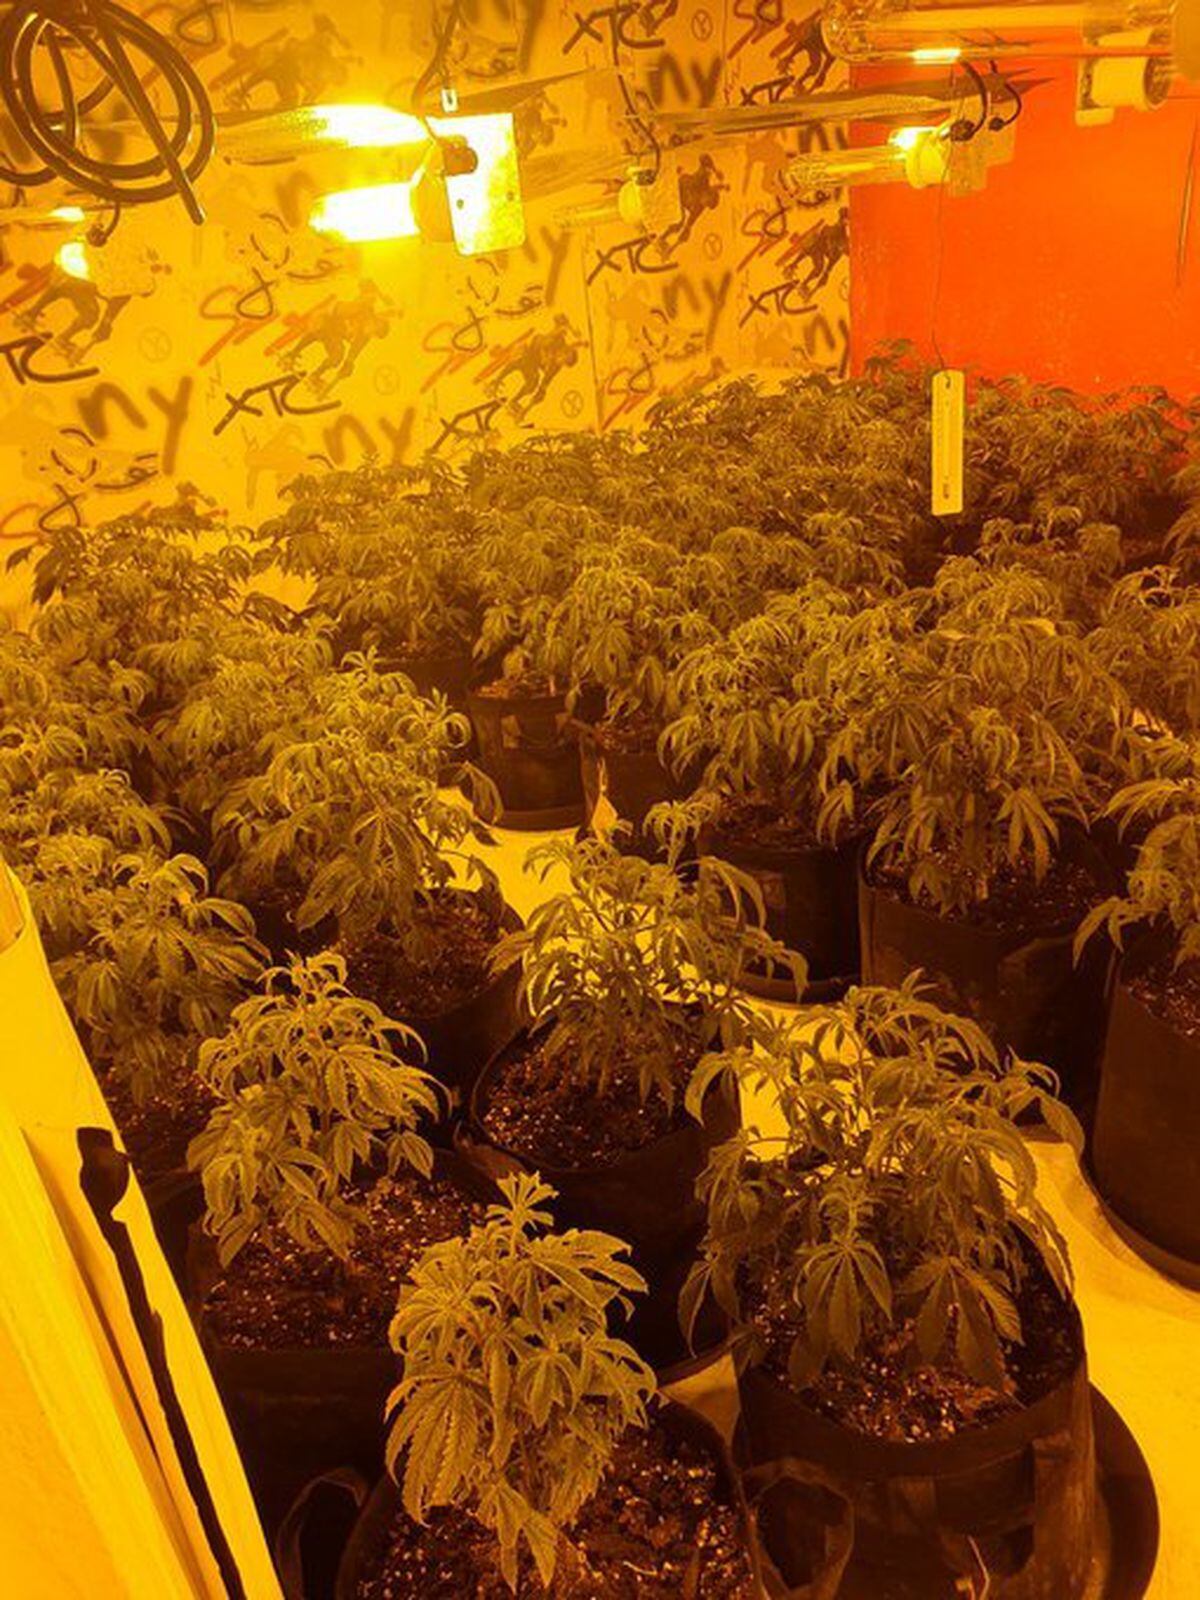 Cannabis farm found in Brierley Hill | Express & Star